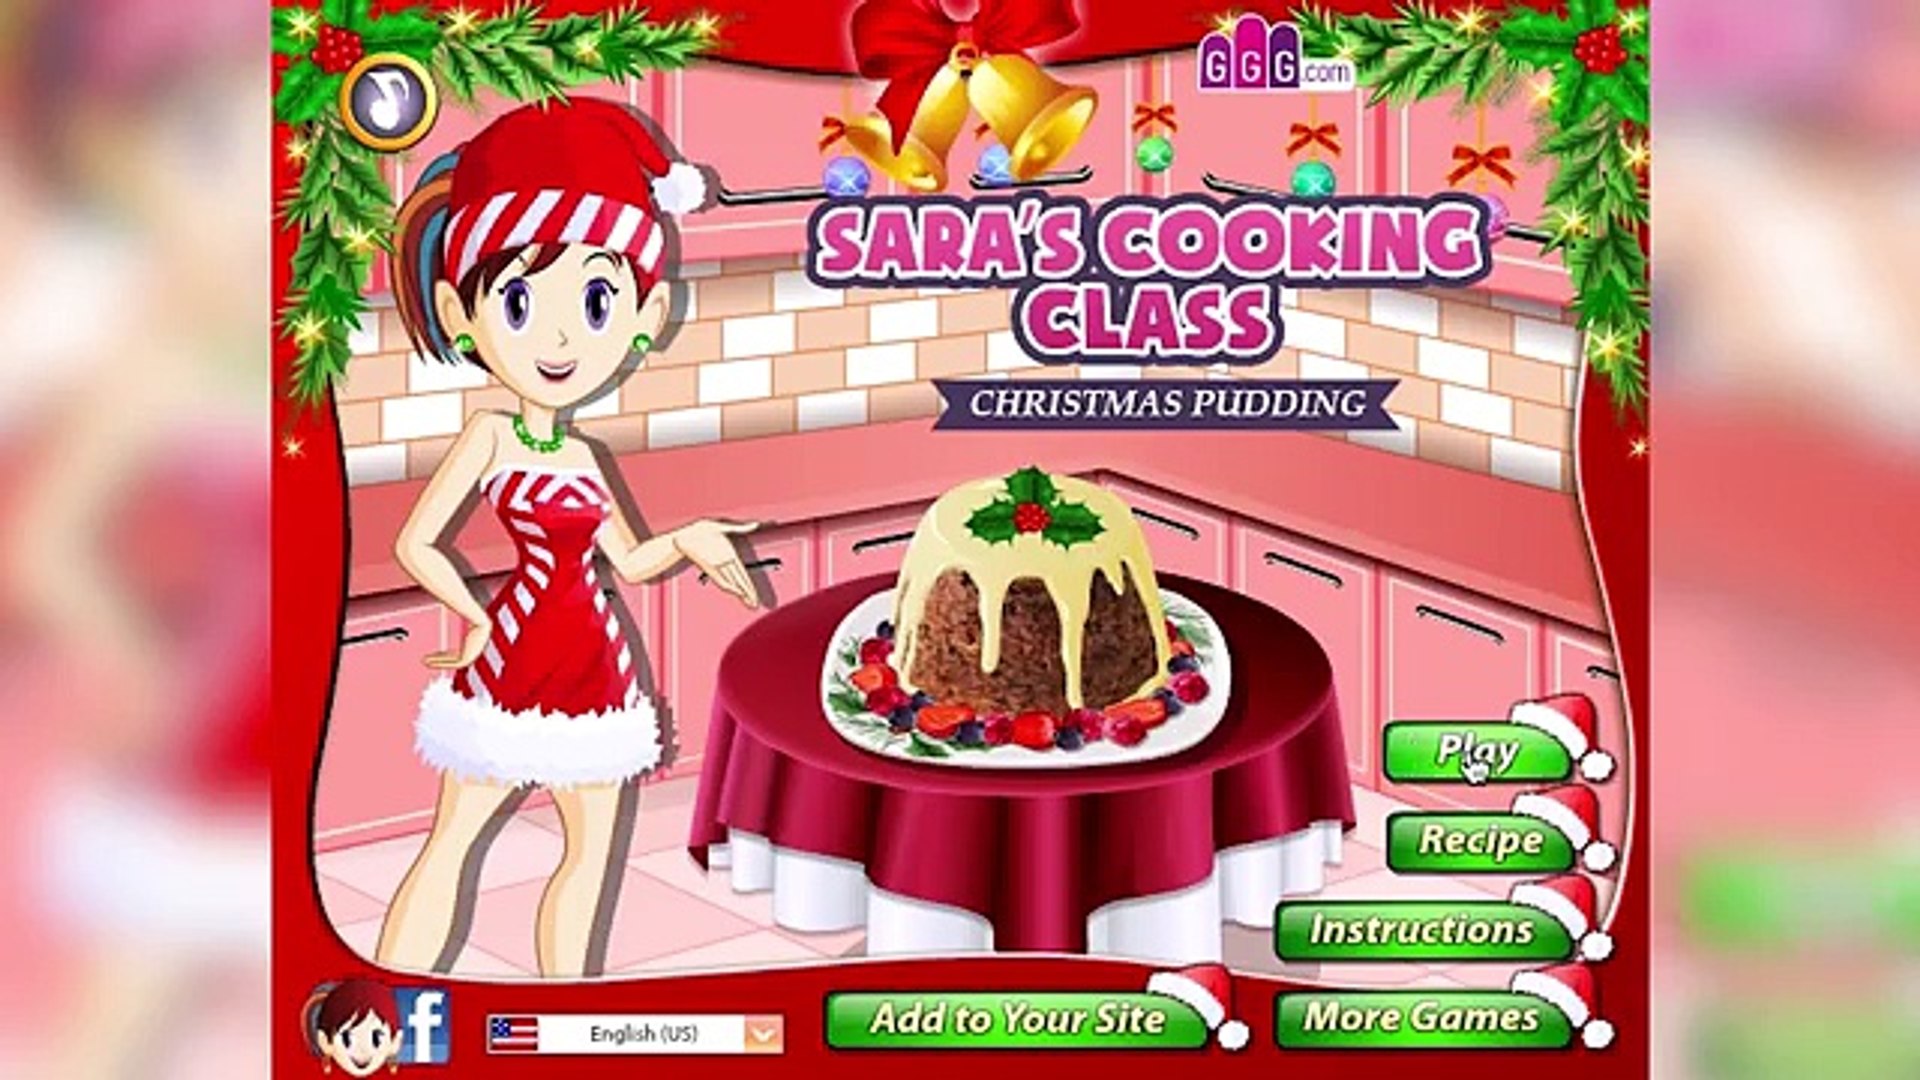 ⁣Learn to Bake! Saras Cooking Class Christmas Pudding